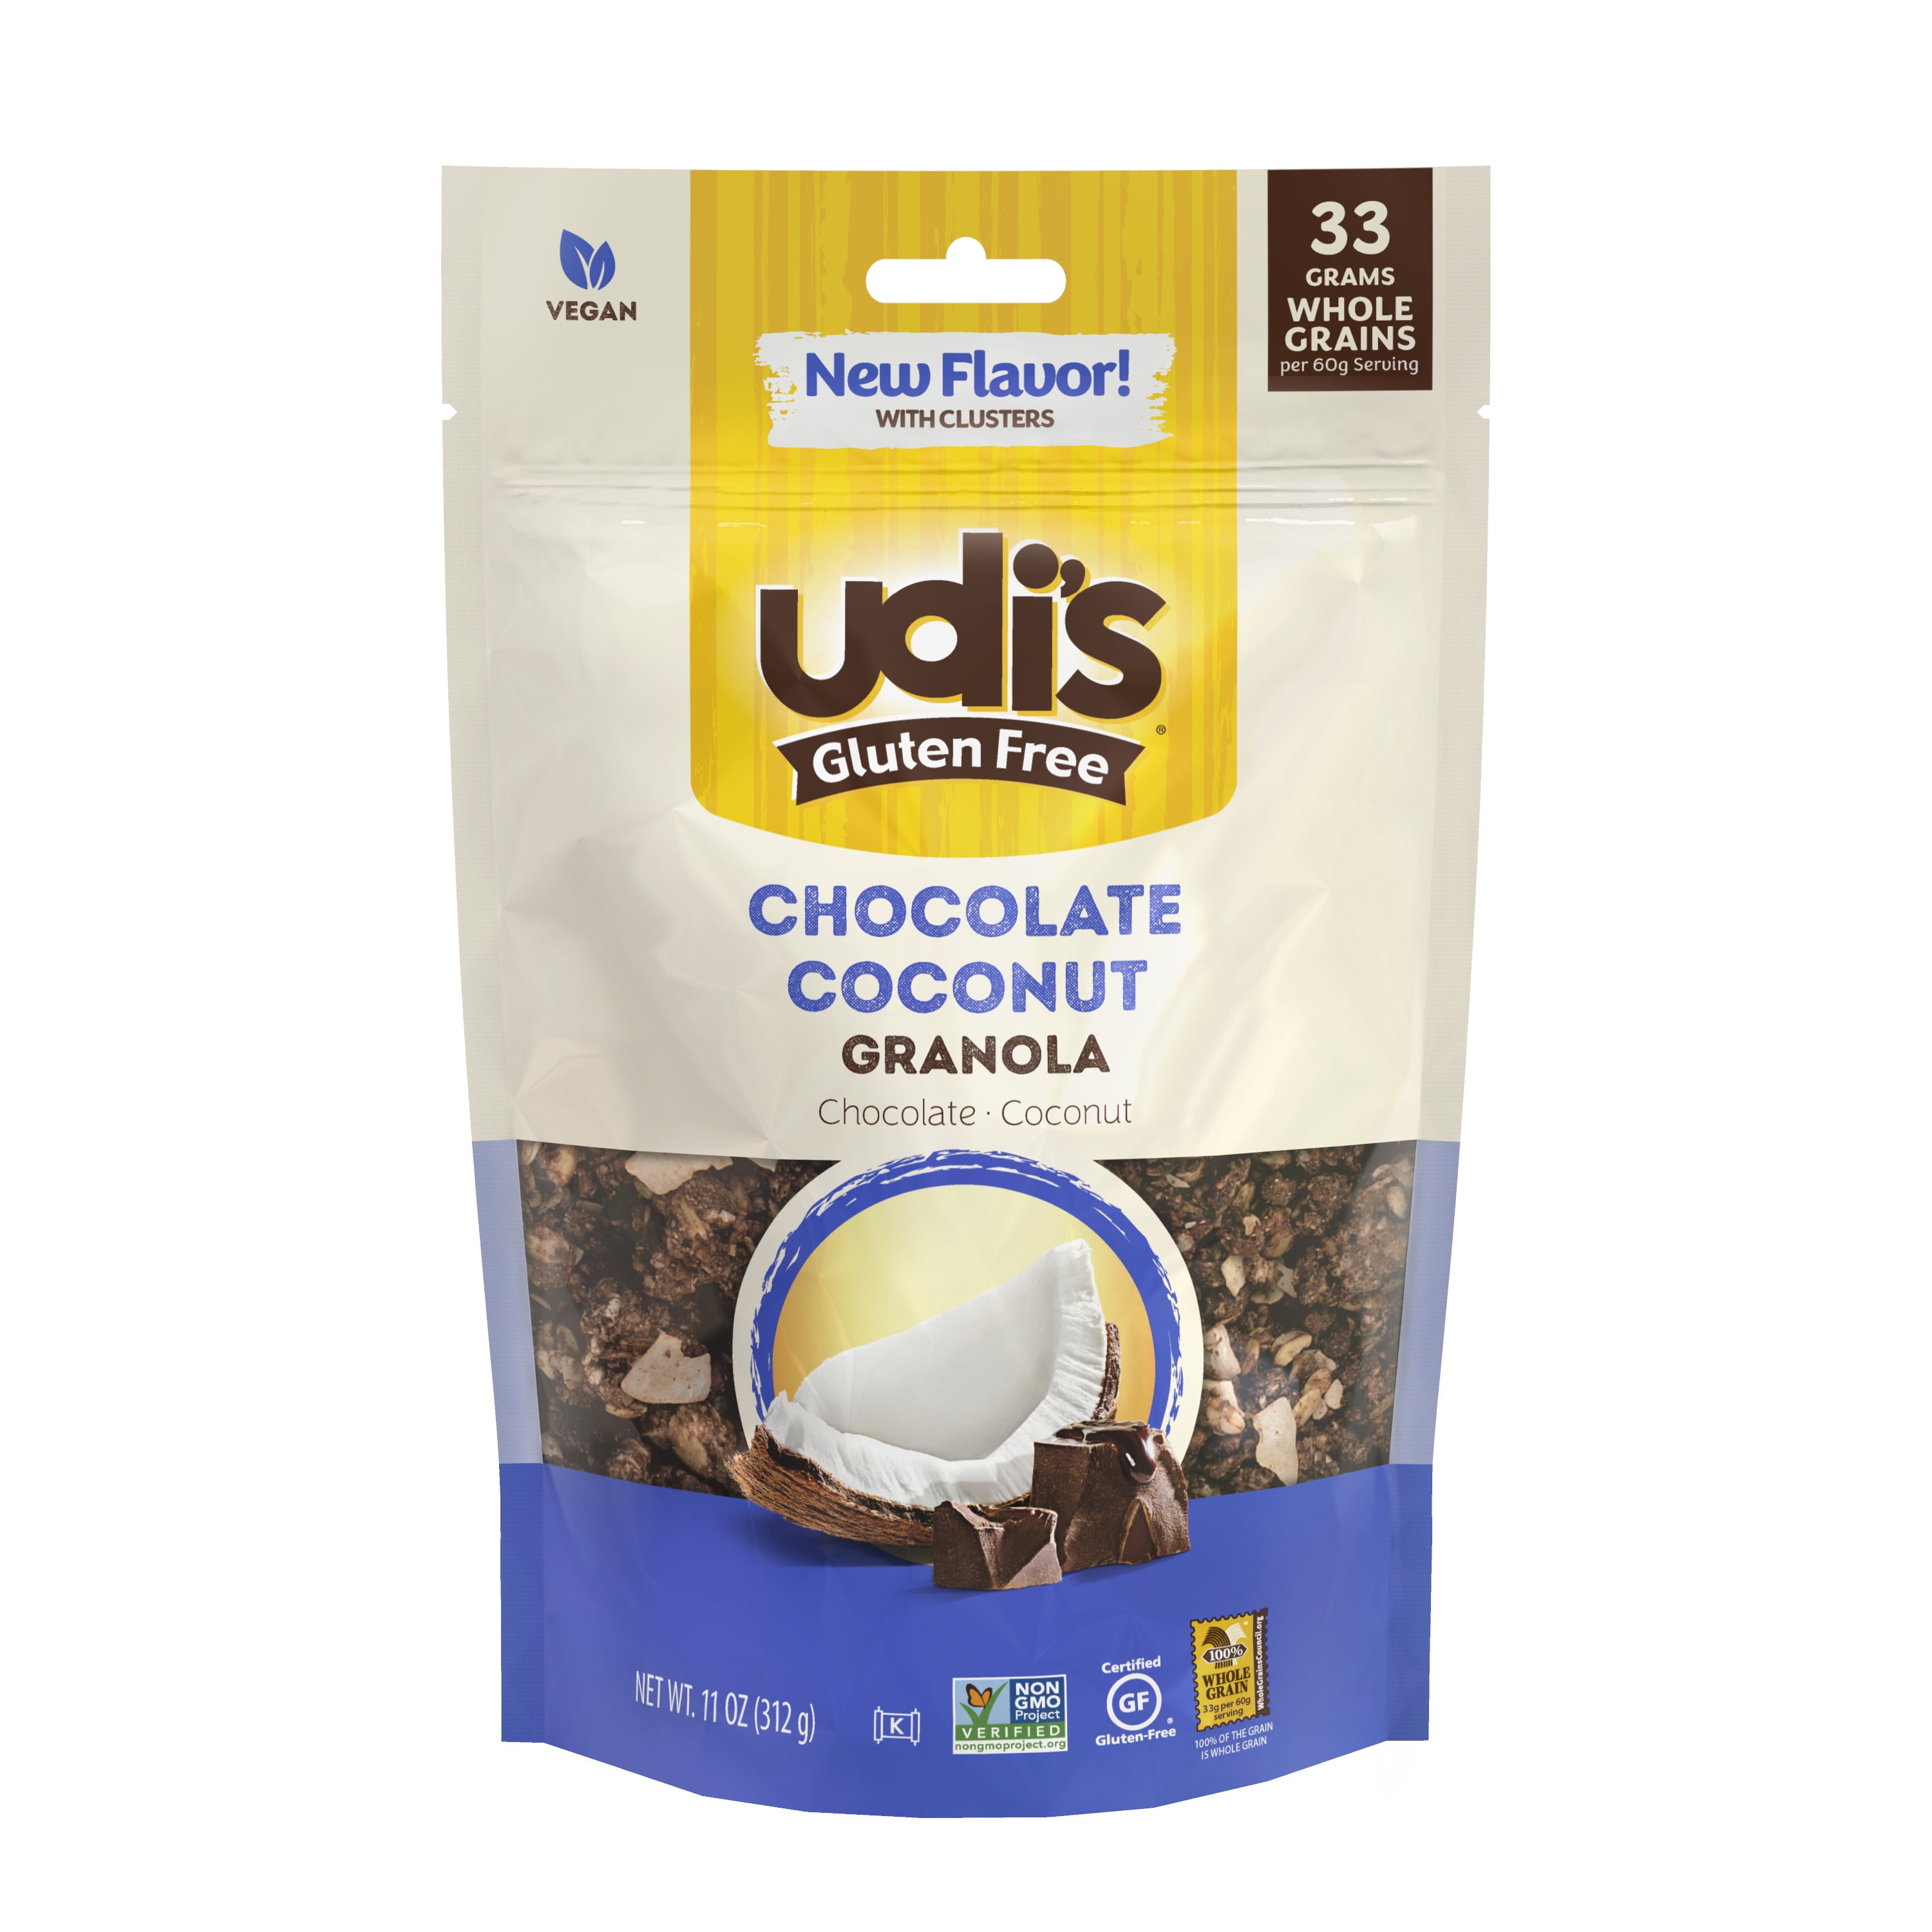 Udi's Gluten Free Chocolate Coconut Granola, 11 oz